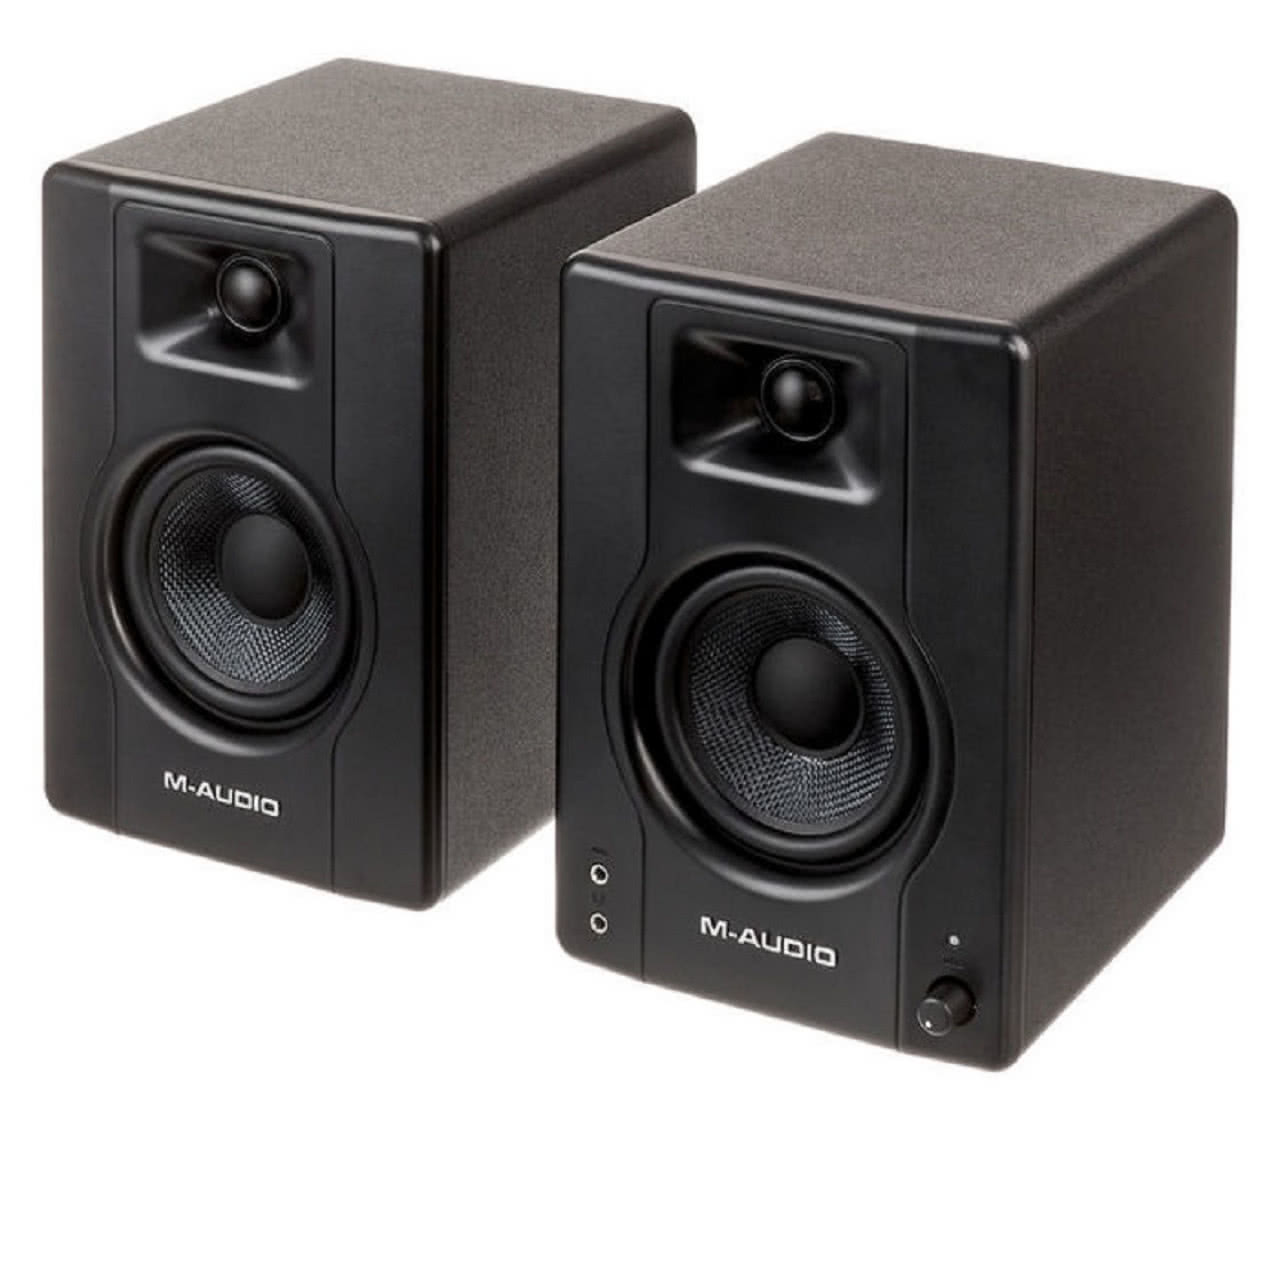 Audio bx. M-Audio bx3. Студийные мониторы m-Audio bx4. M-Audio bx4 комплект. M-Audio bx3 pair b.